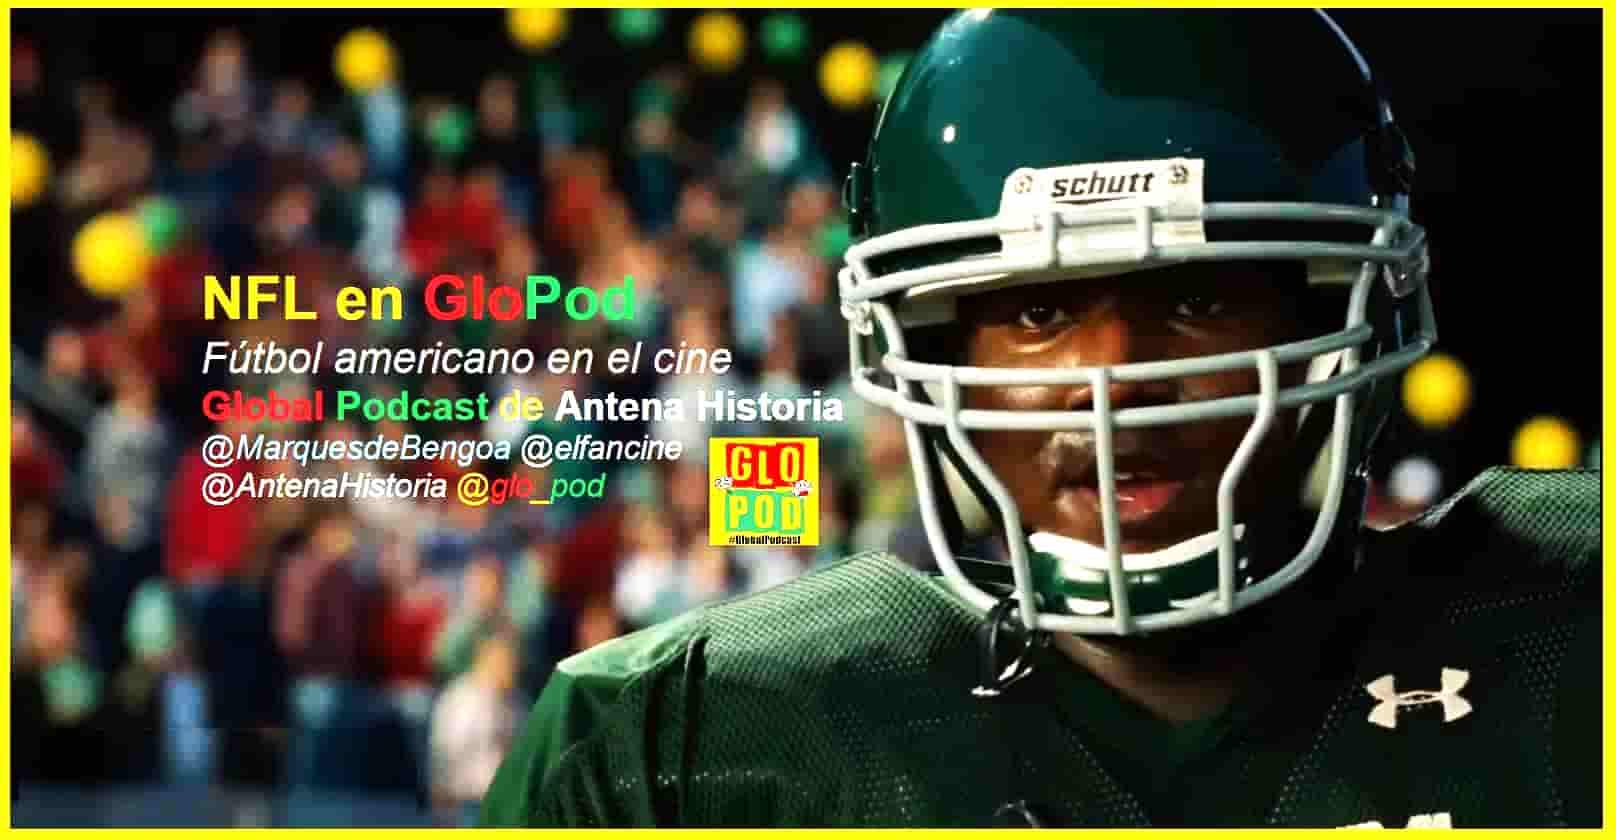 NFL - Peliculas de Futbol americano - GloPod - Global Podcast - Antena Historia - el fancine - Alvaro Garcia - Podcast de cine - @elfancine - Web de cine